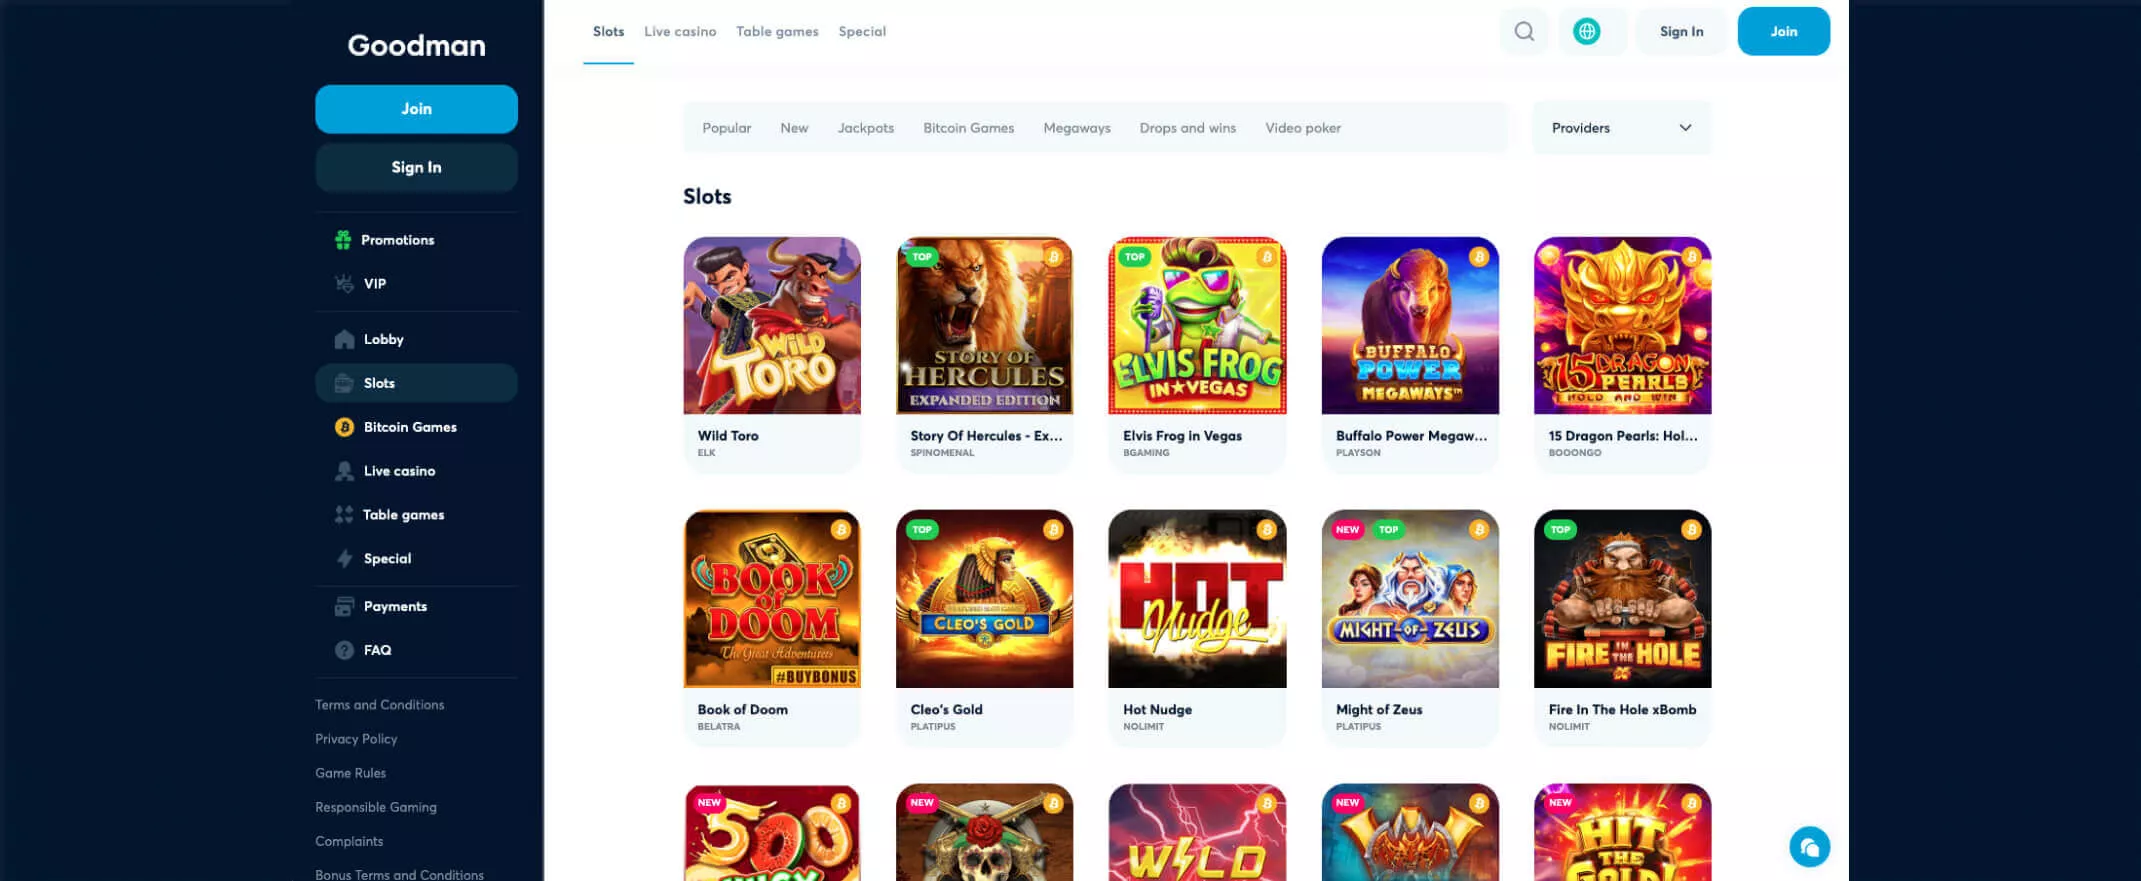 Goodman Casino screenshot of the games page